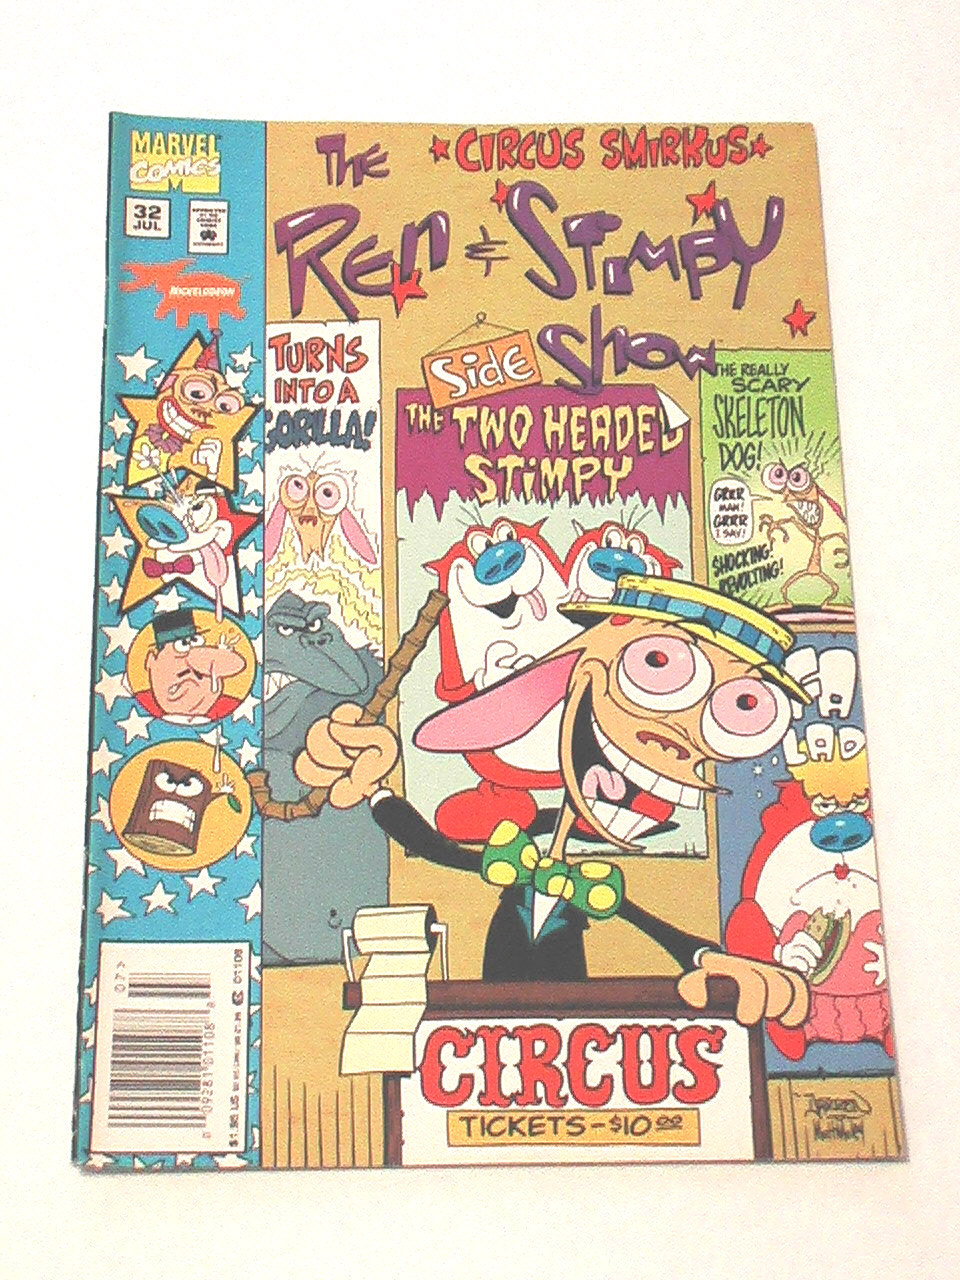 The Ren & Stimpy Show - * Circus Smirkus * - Comics & Graphic Novels